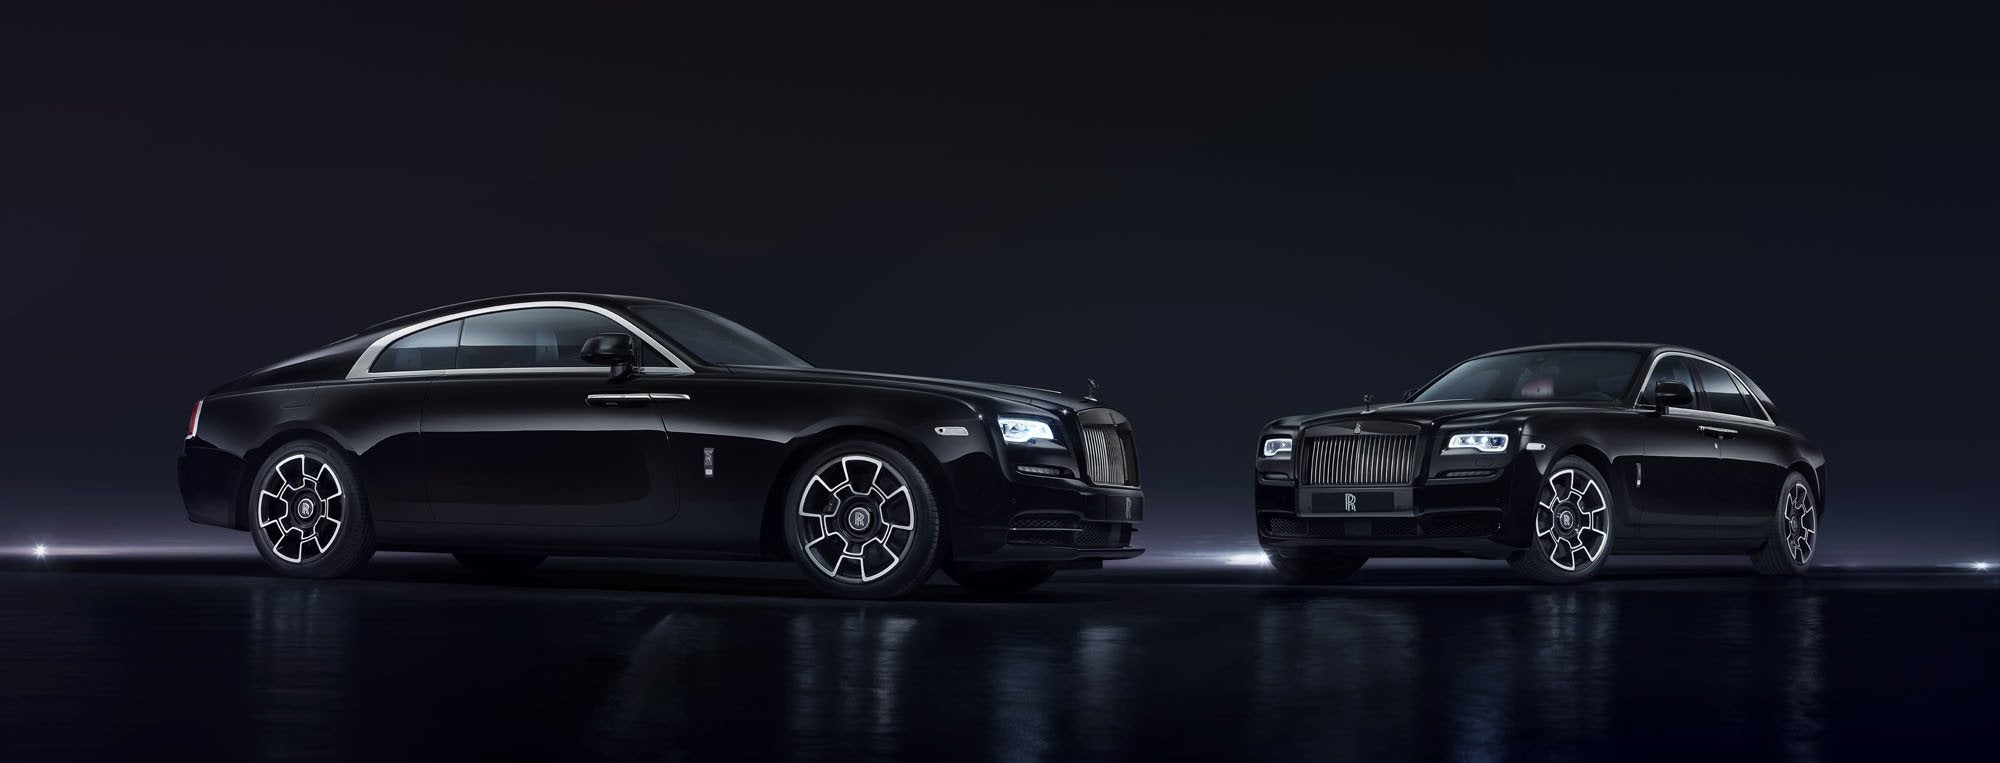 Rolls-Royce Dawn Luxury Car of the Year in Sterling VA